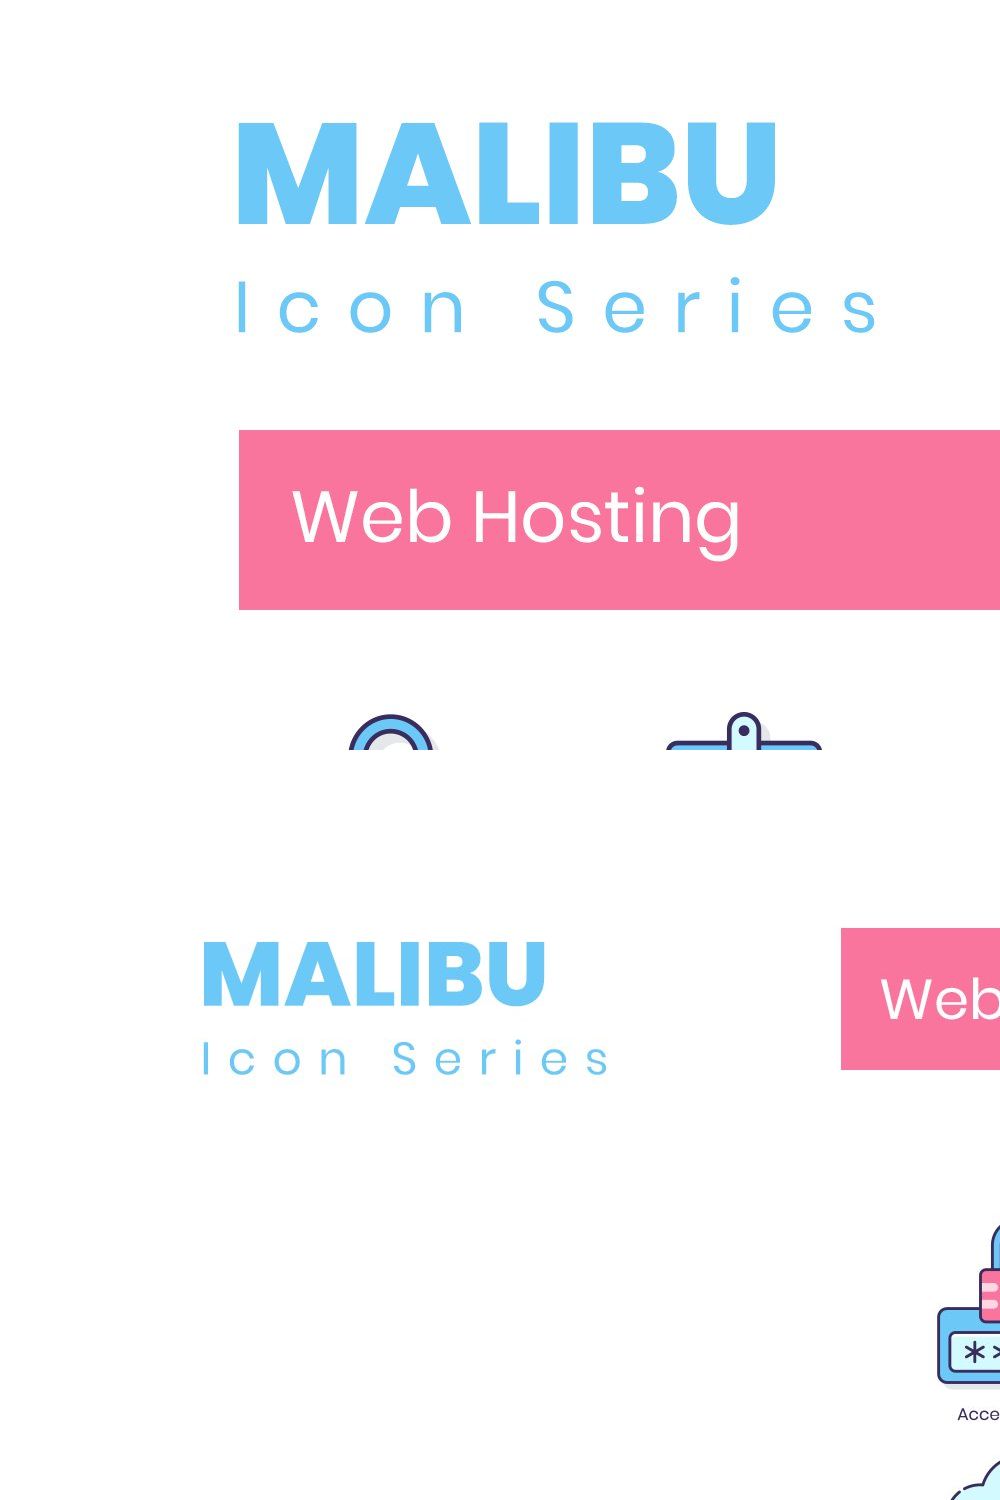 100 Web Hosting Icons - Malibu pinterest preview image.